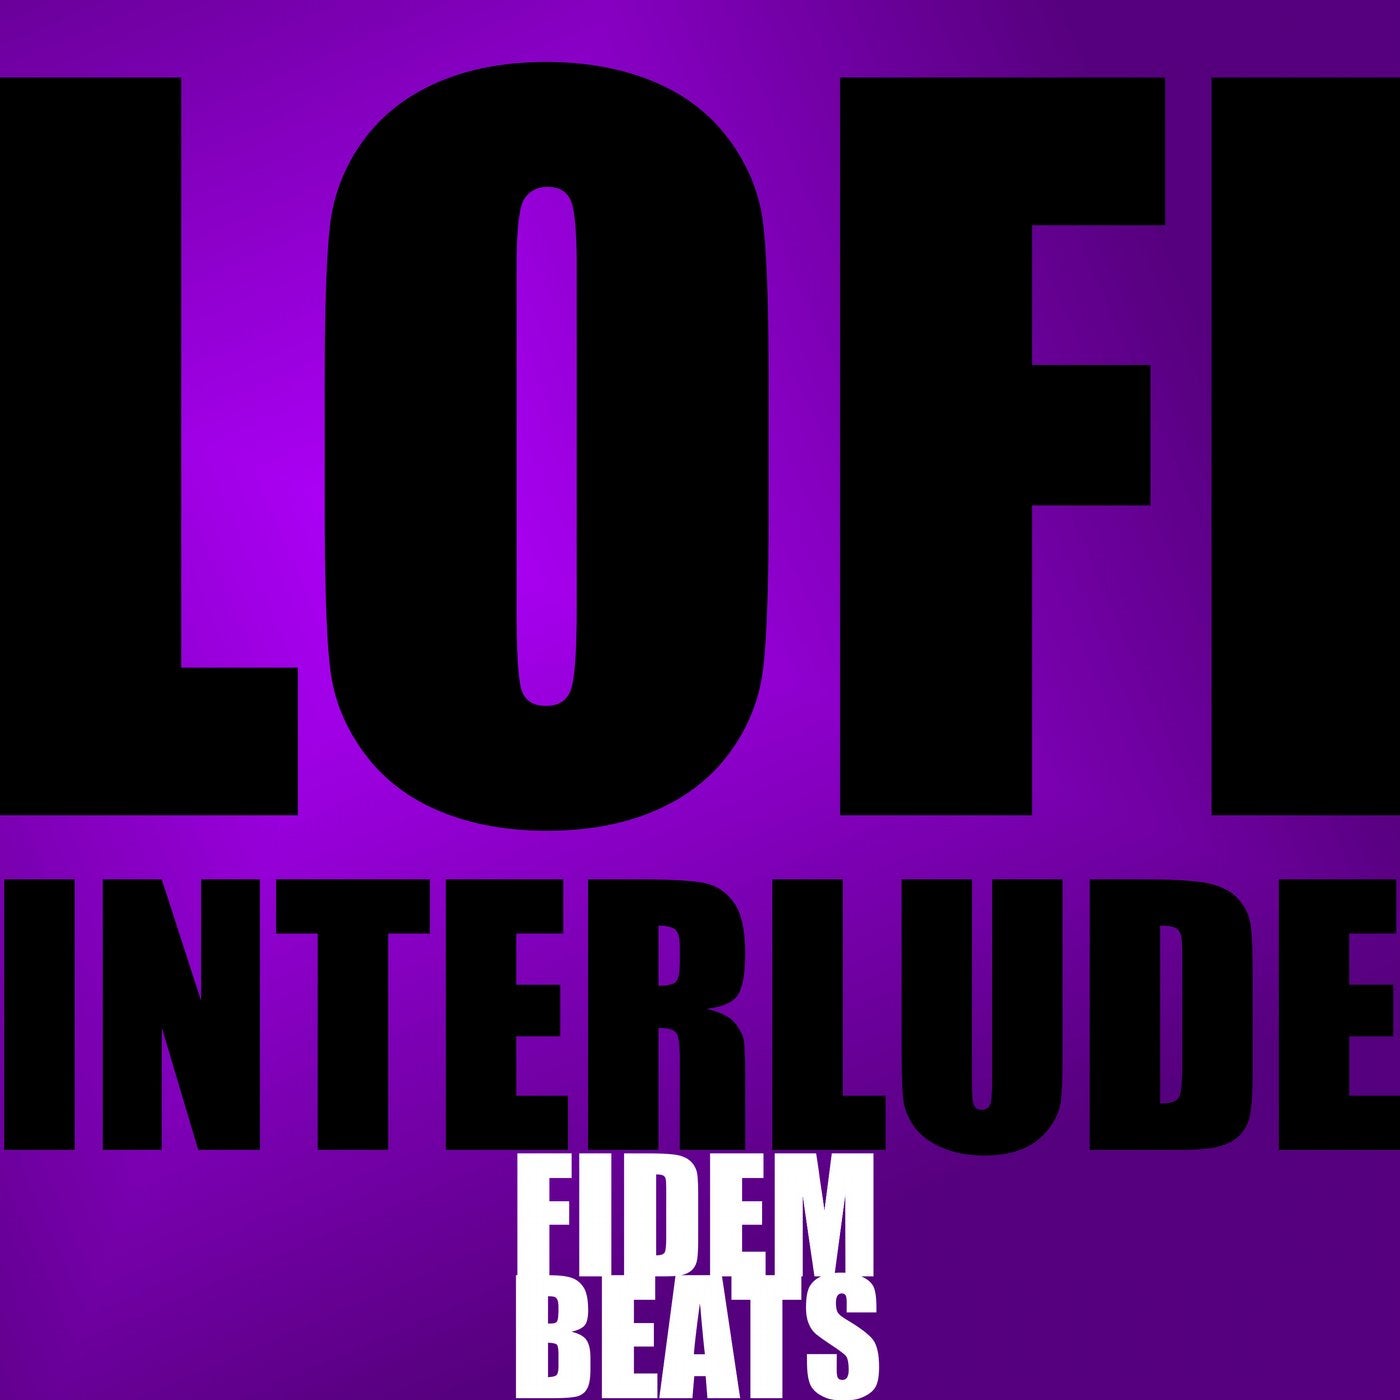 LoFi Interlude (Instrumental)